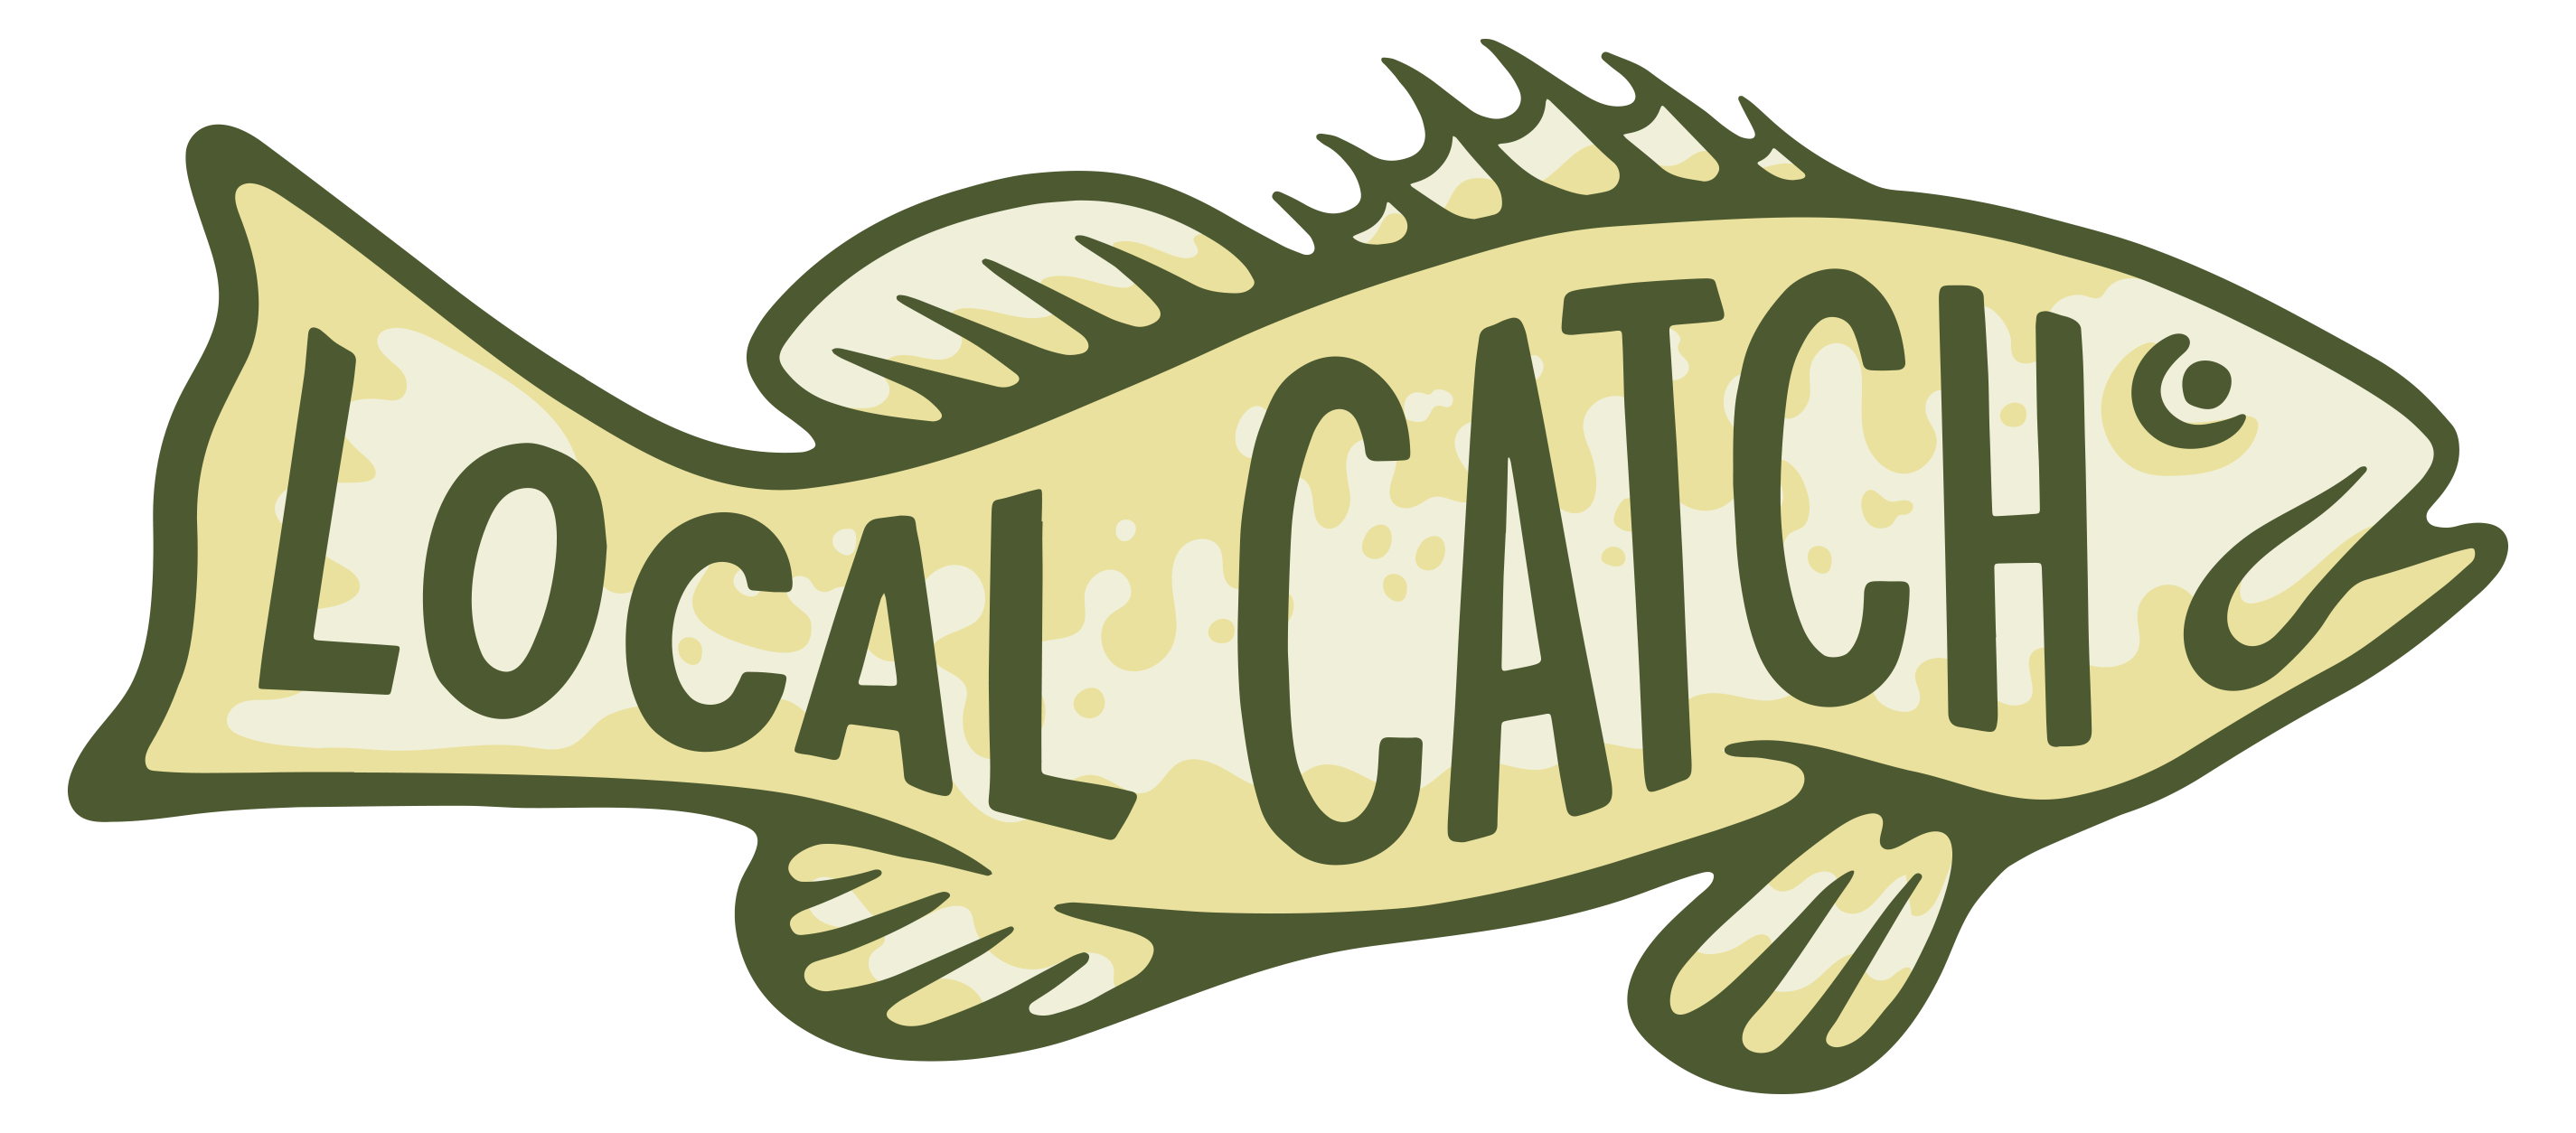 Local Catch : Brand Short Description Type Here.